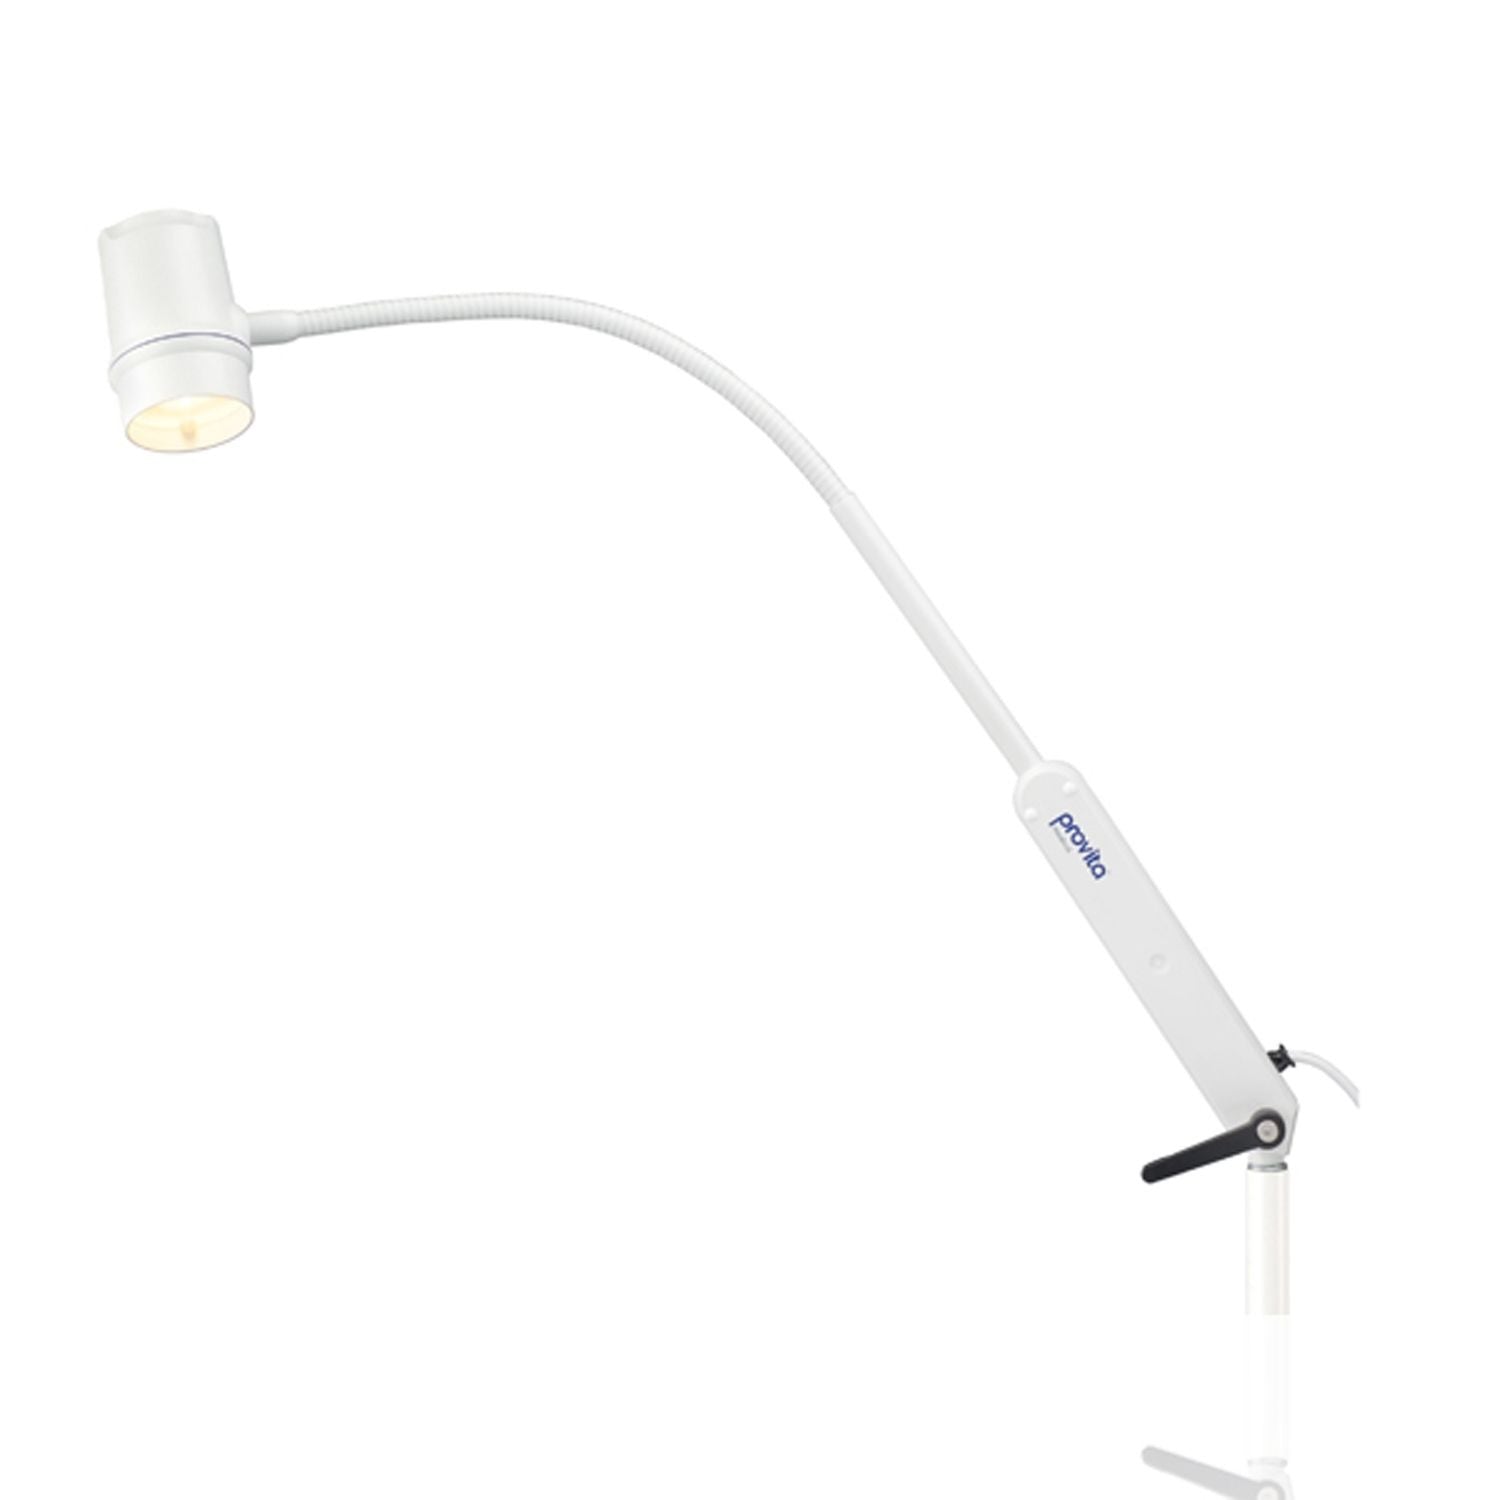 Provita 20w Examination Lamp with Flexible Gooseneck Arm